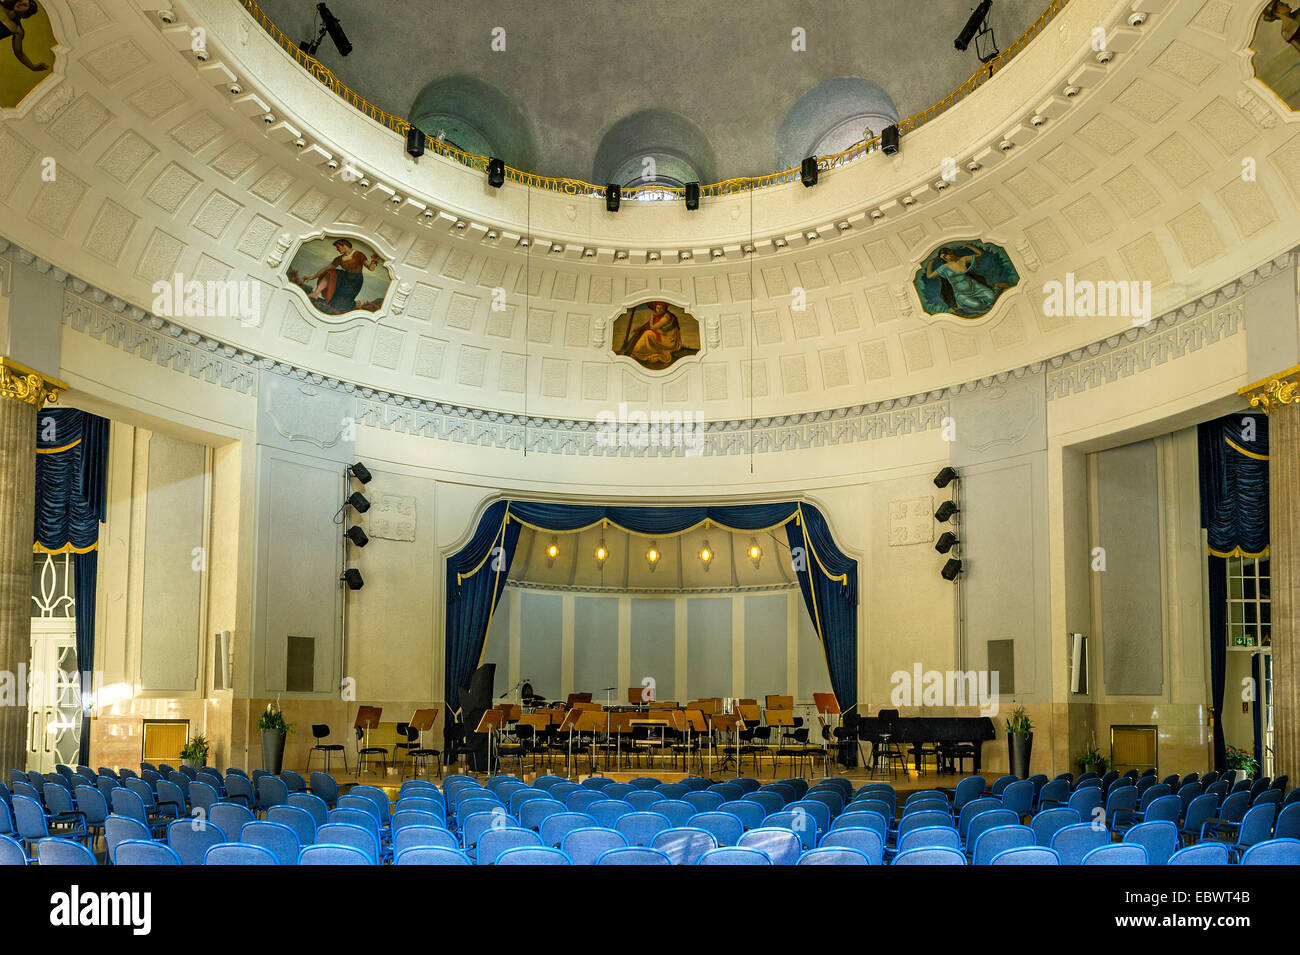 Concert Hall of the concert rotunda in the park, Bad Reichenhall, Upper Bavaria, Bavaria, Germany Stock Photo